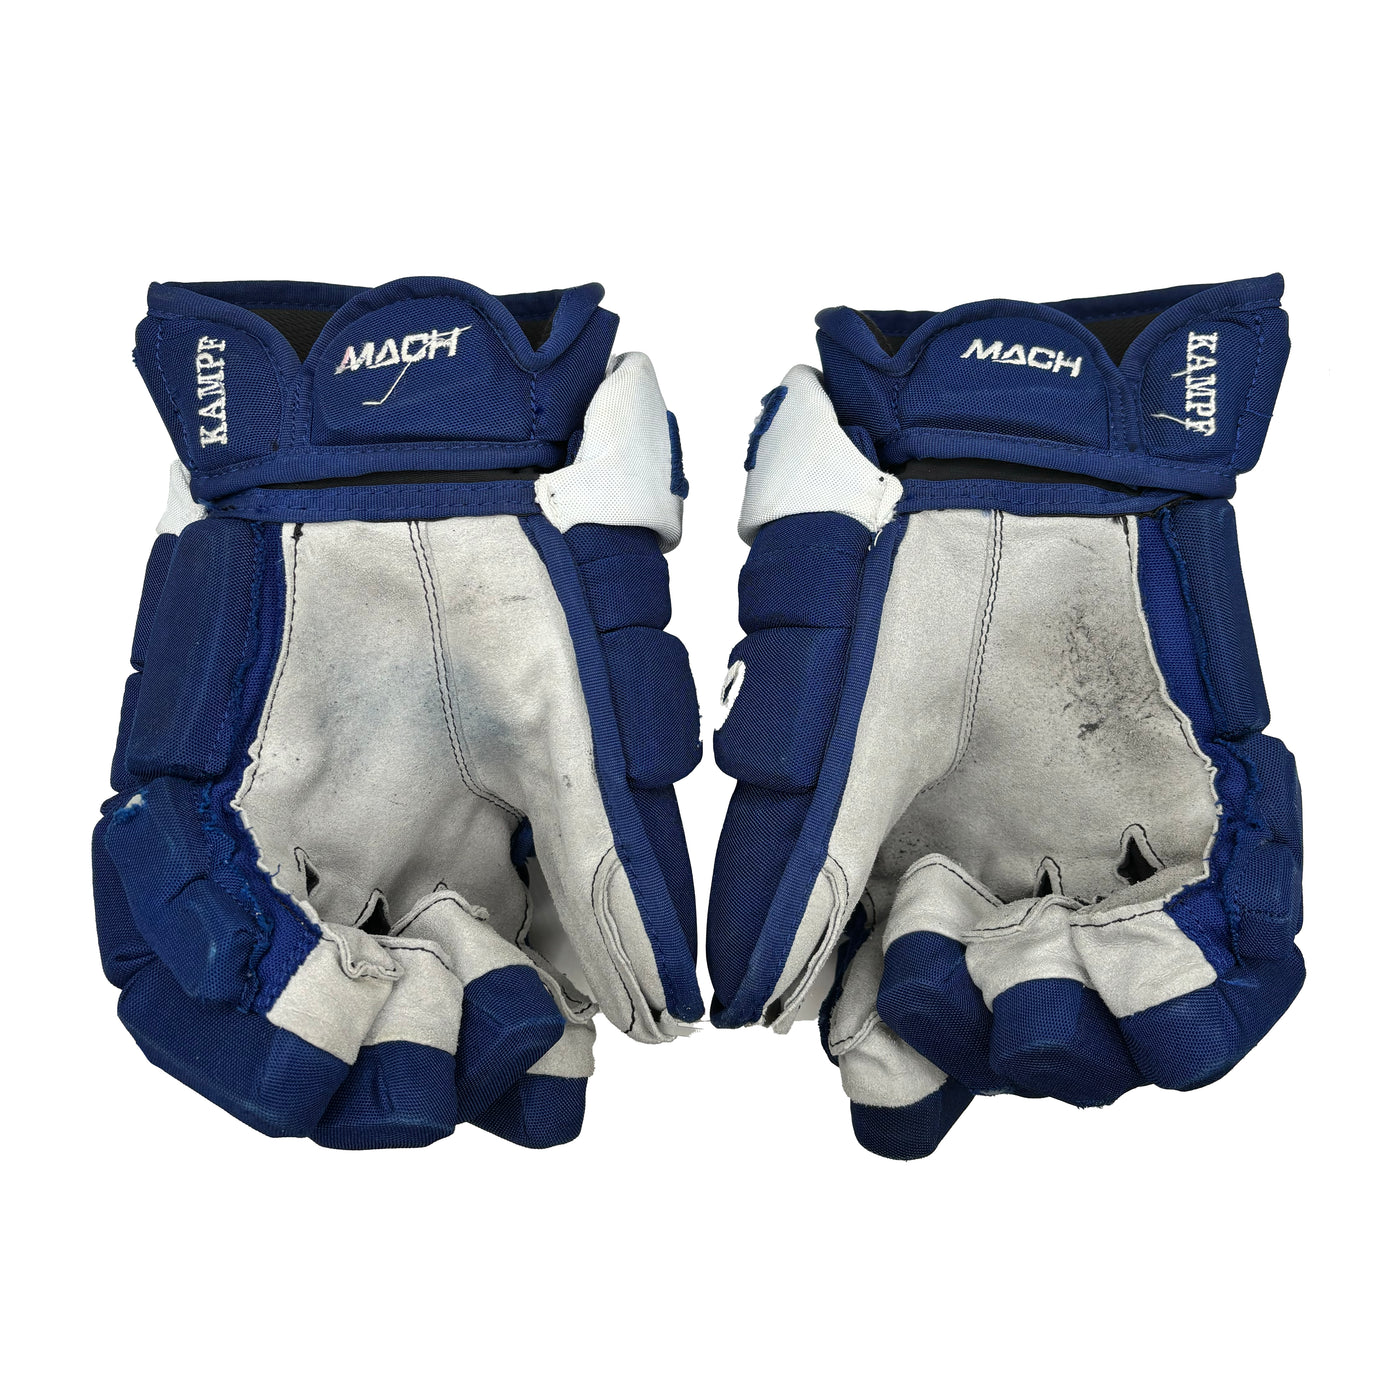 Bauer Supreme Mach - Toronto Maple Leafs -  Used Pro Stock Glove - DK